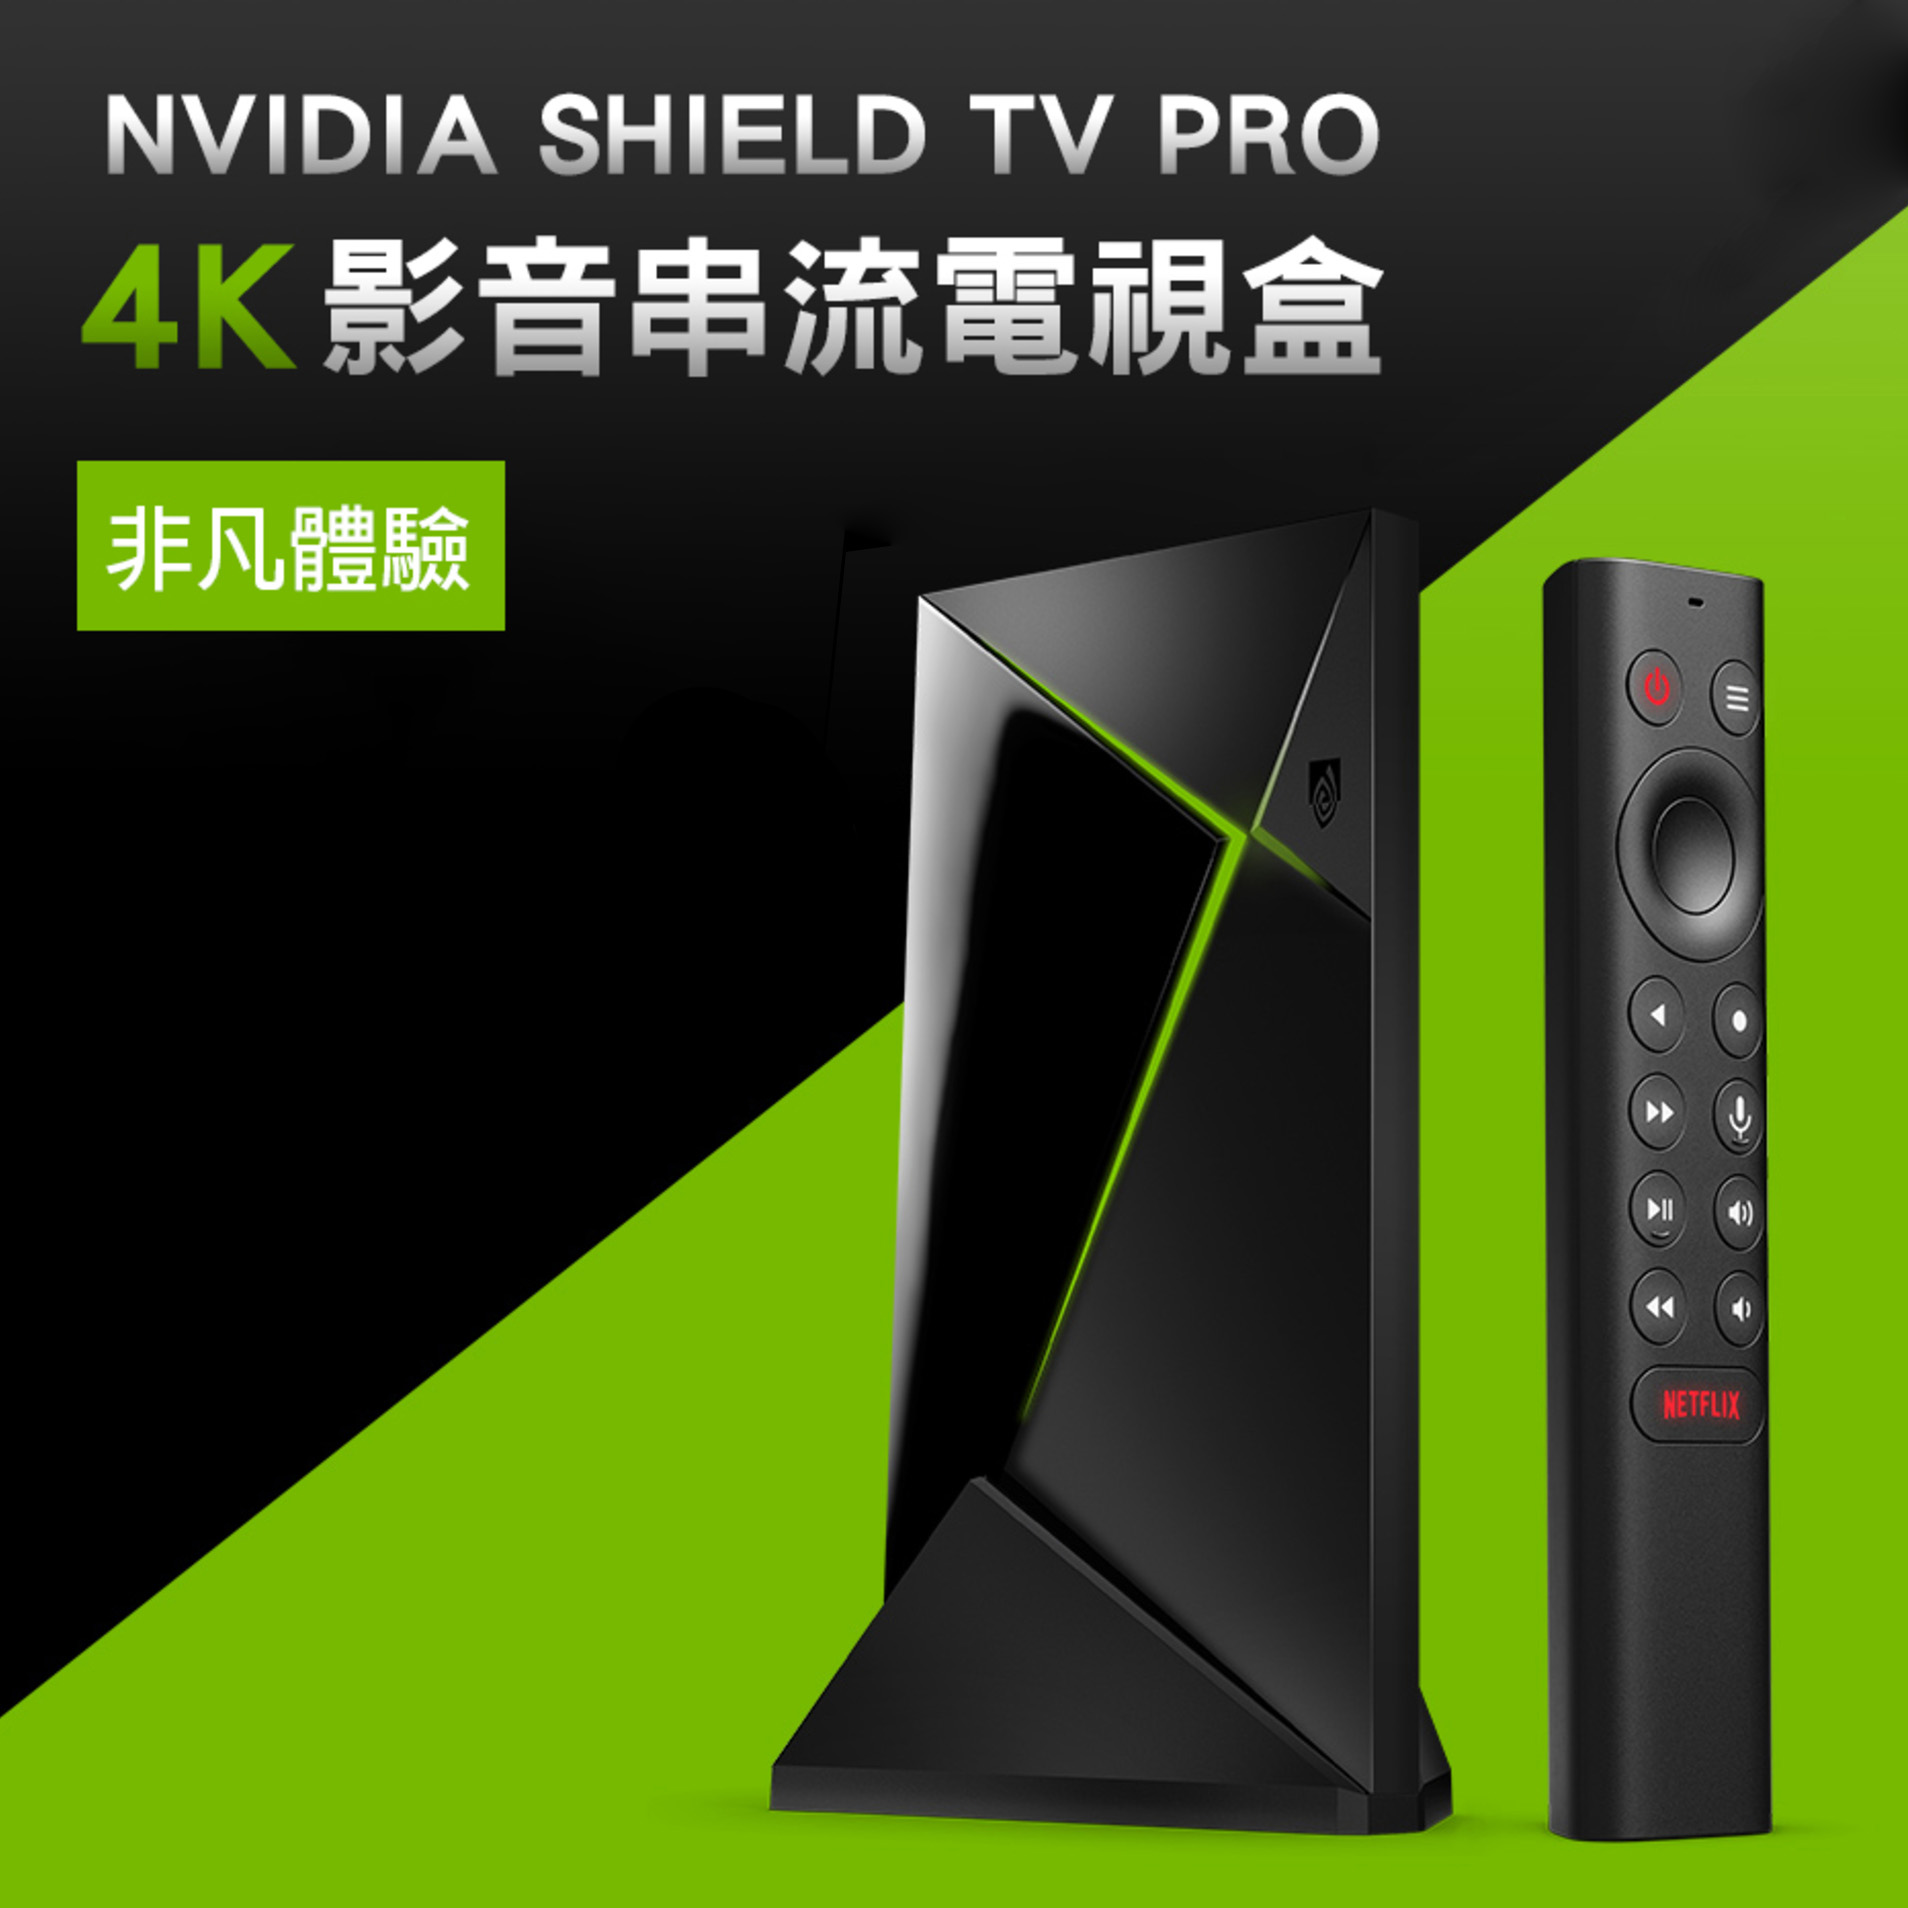 【NVIDIA】SHIELD TV PRO 4K 電視盒《含遙控器》